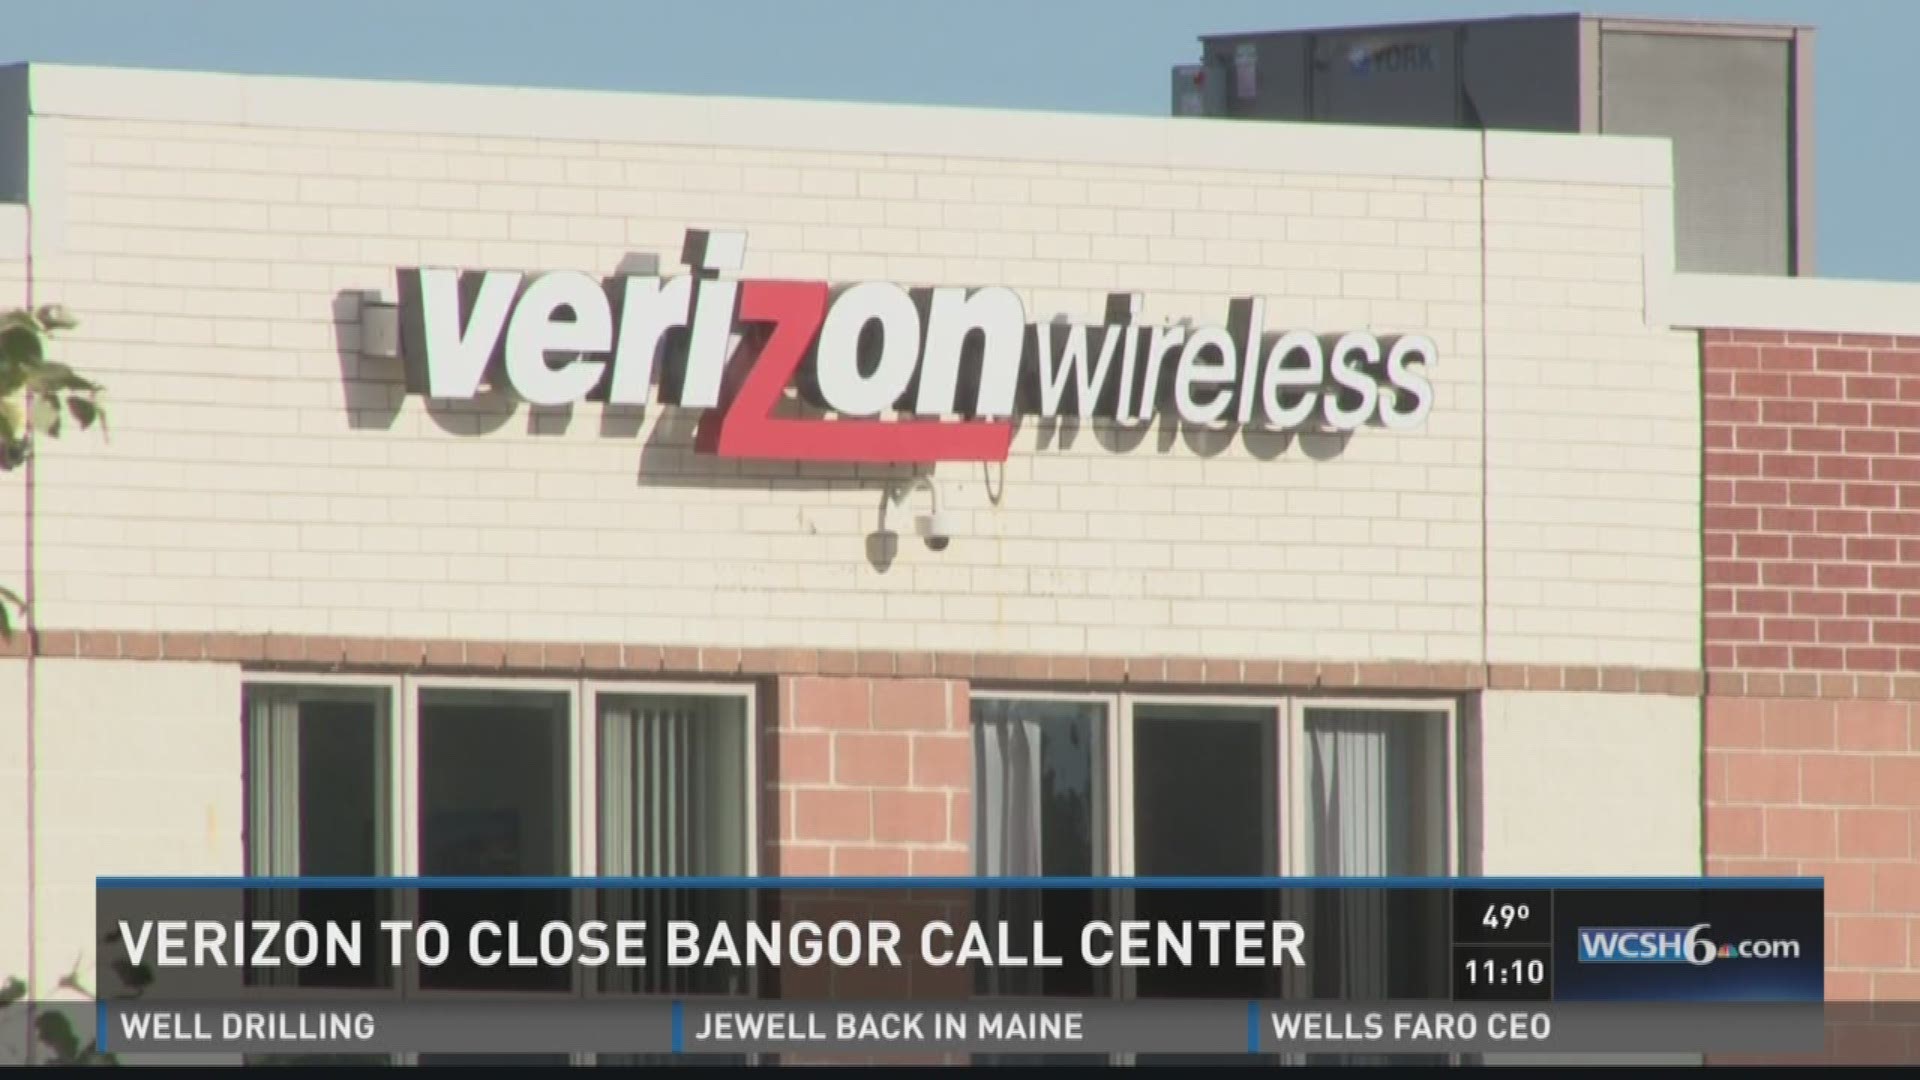 Verizon call center based in Bangor to close.